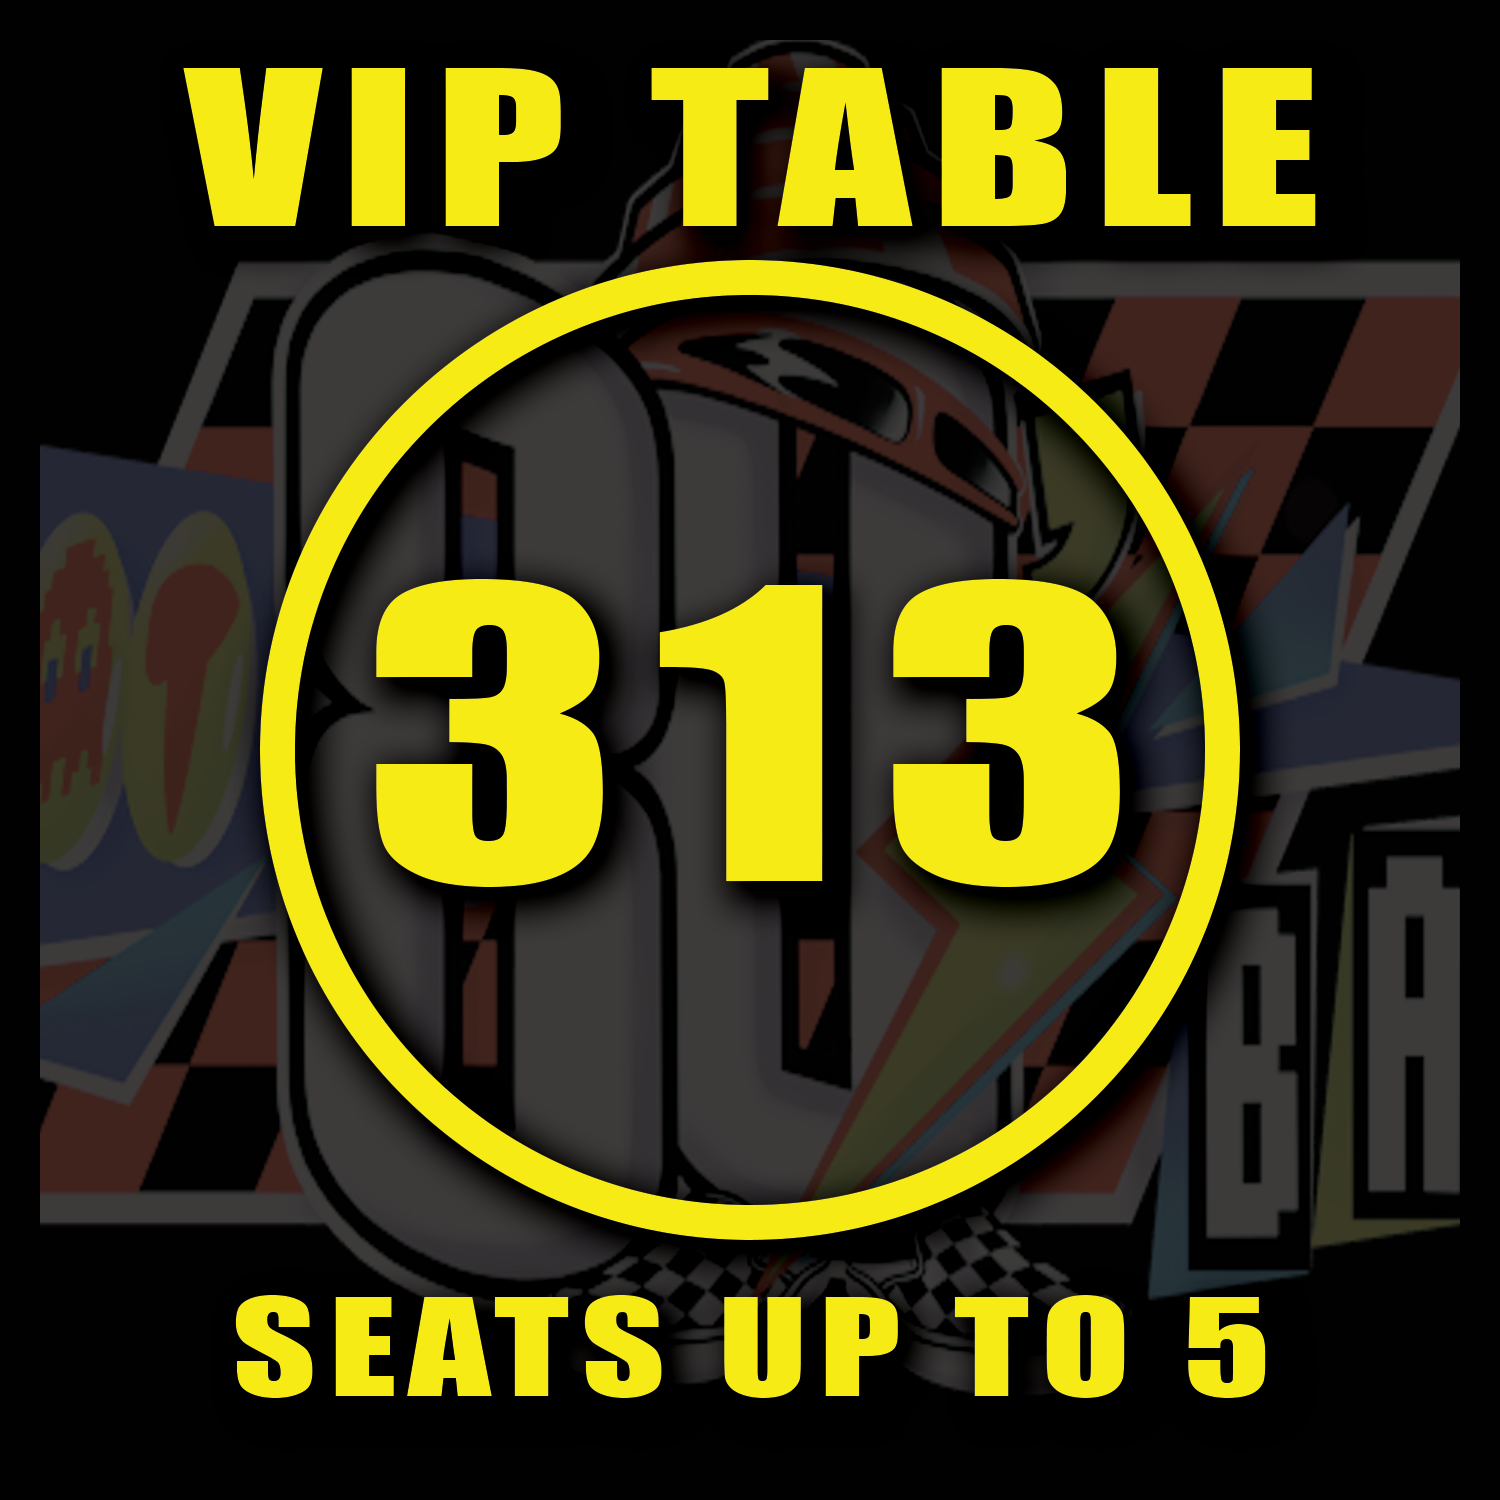 VIP TABLE 313